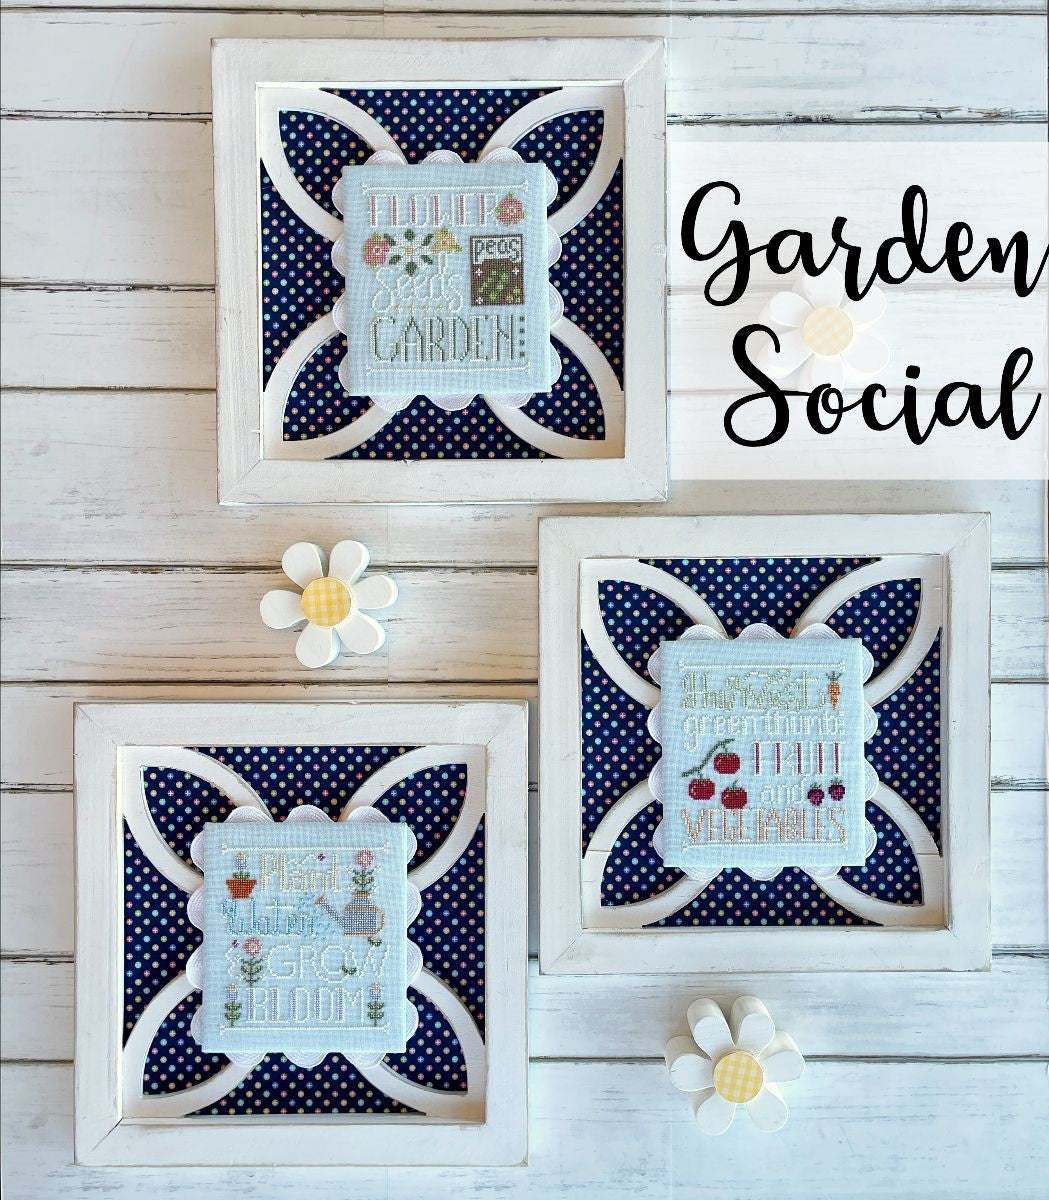 Garden Social by Little Stitch Girl